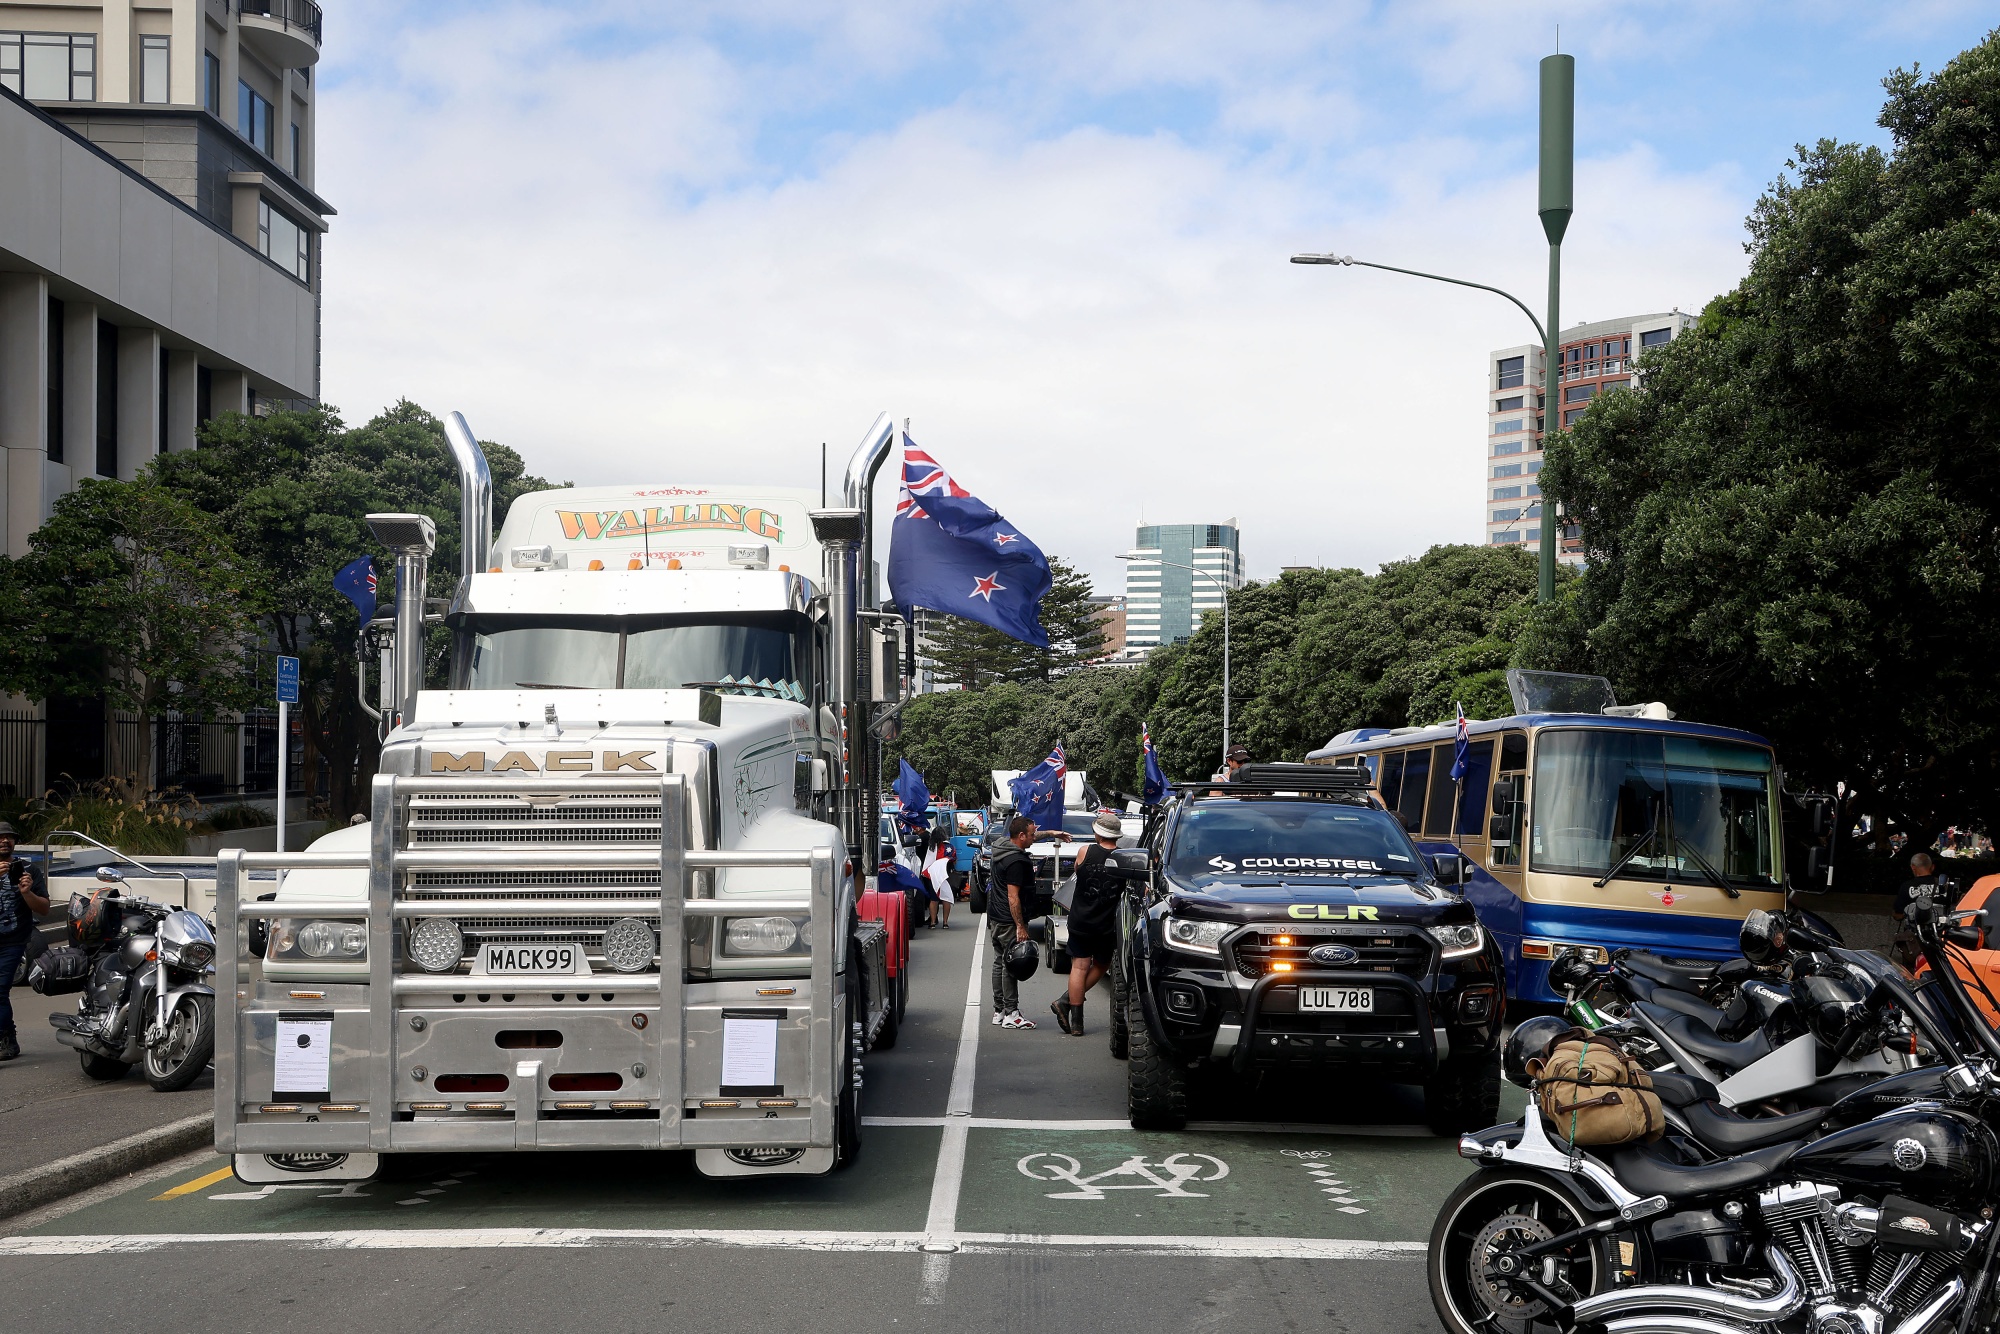 Protesters Mimic Ottawa Blockade to Disrupt New Zealand Capital - Bloomberg